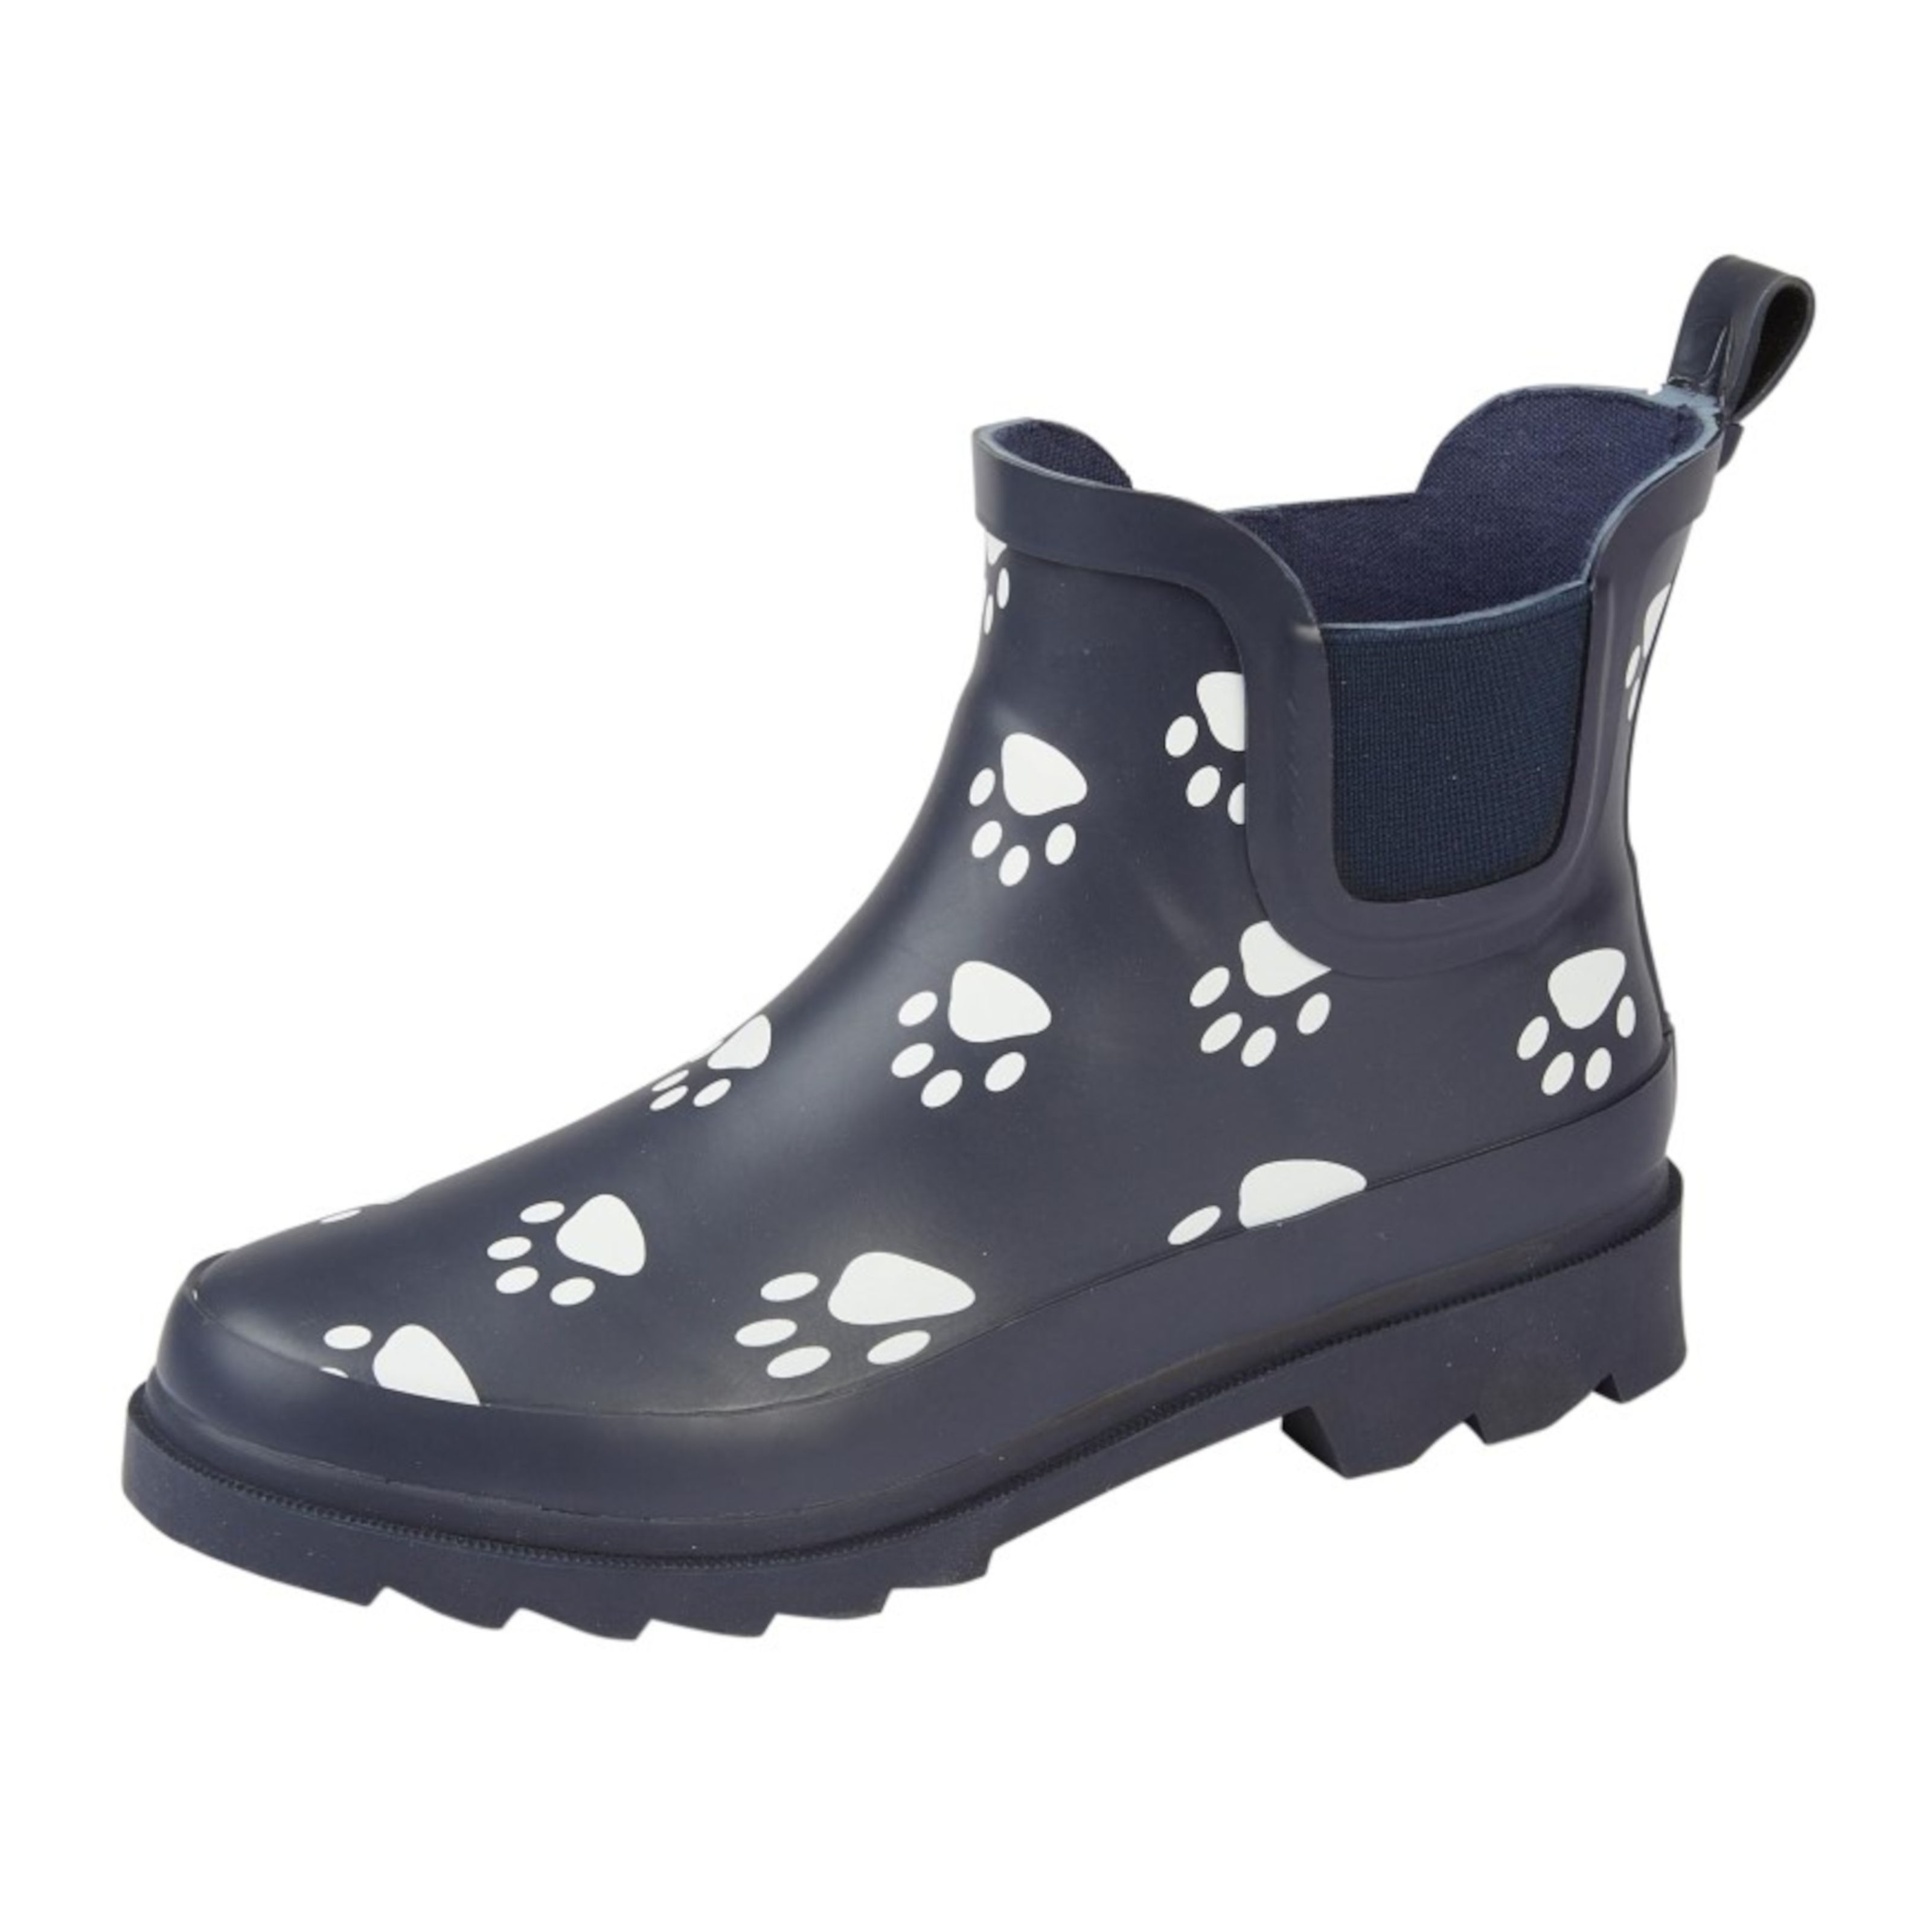 StormWells Womens/Ladies Ankle Wellington Dog Walking Rain Boots DF969 